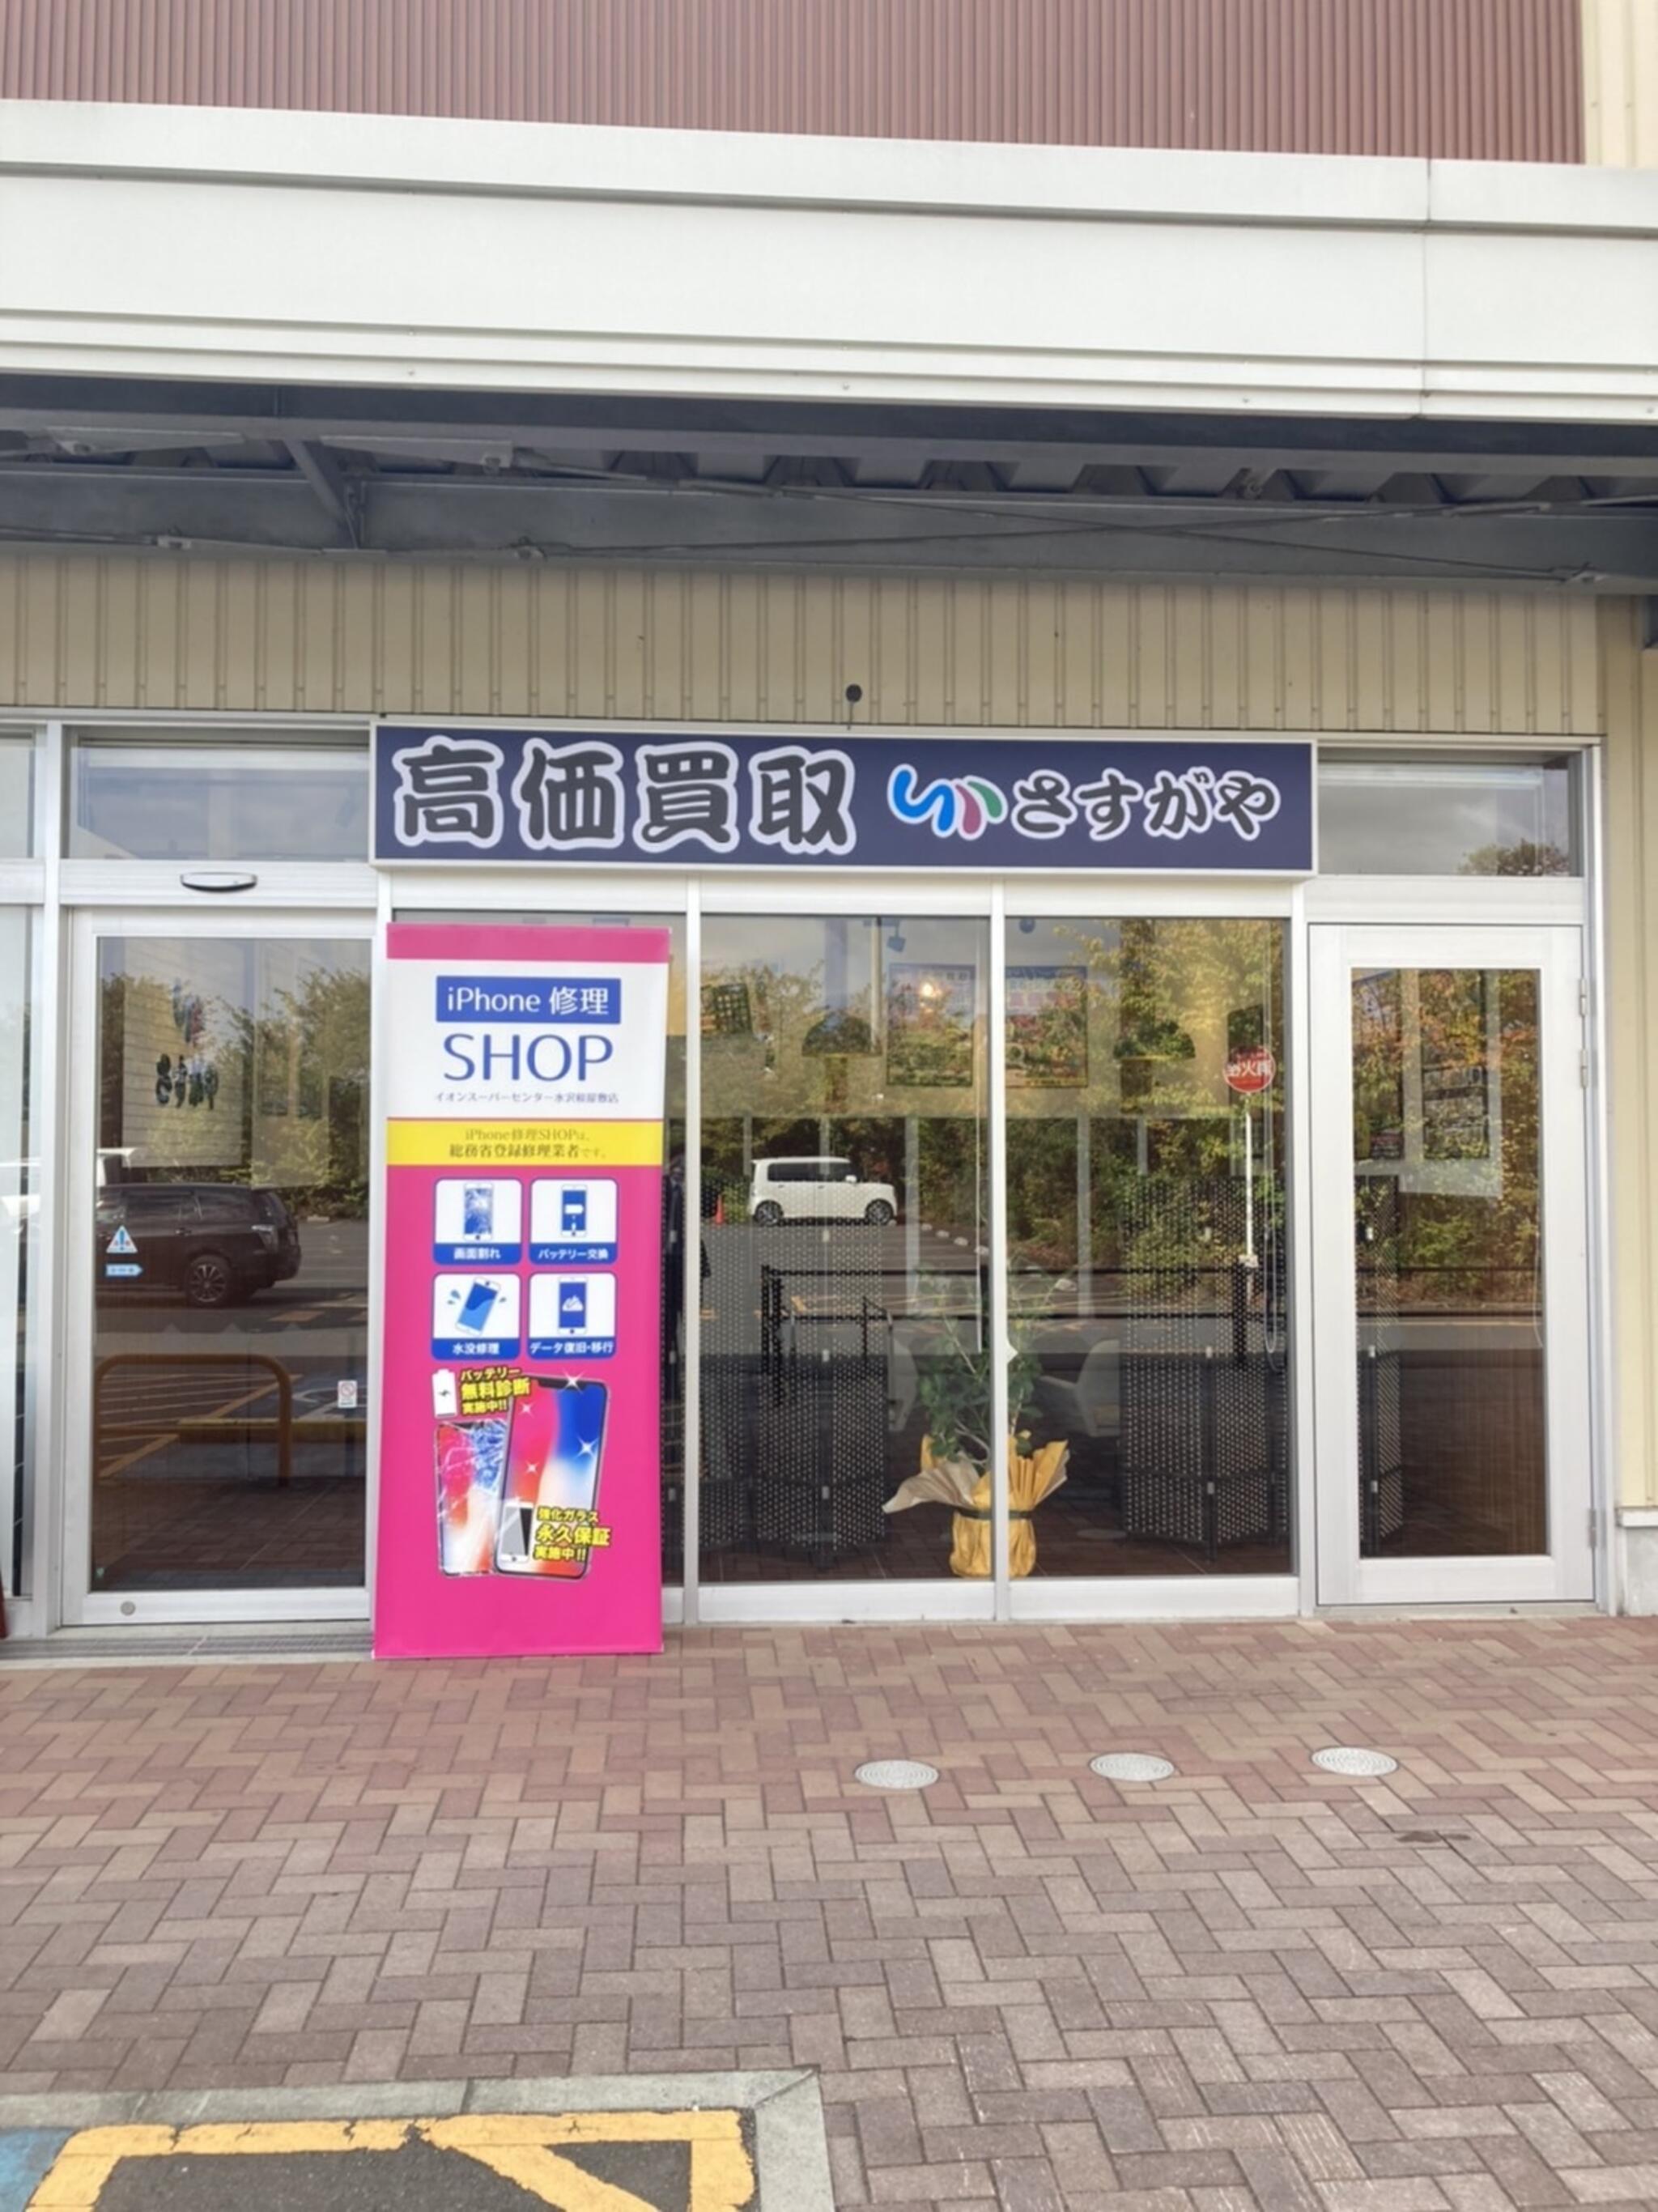 iPhone修理SHOP イオンスーパーセンター水沢桜屋敷店の代表写真1